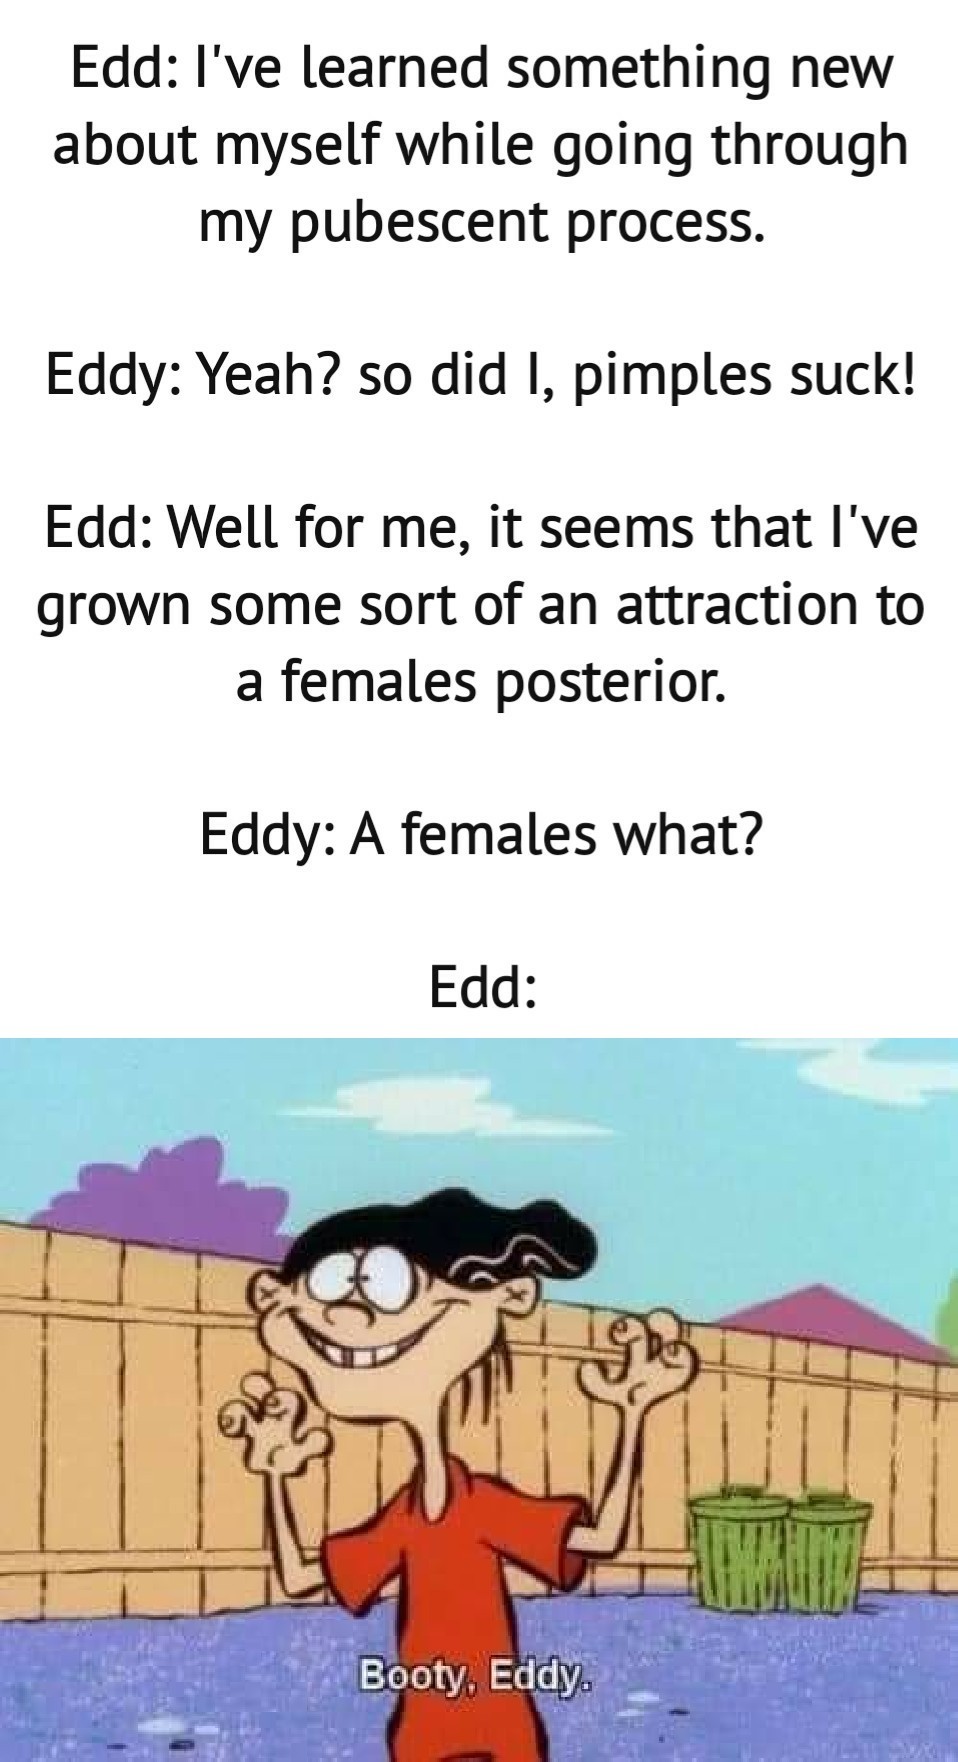 Booty, Eddy! - meme